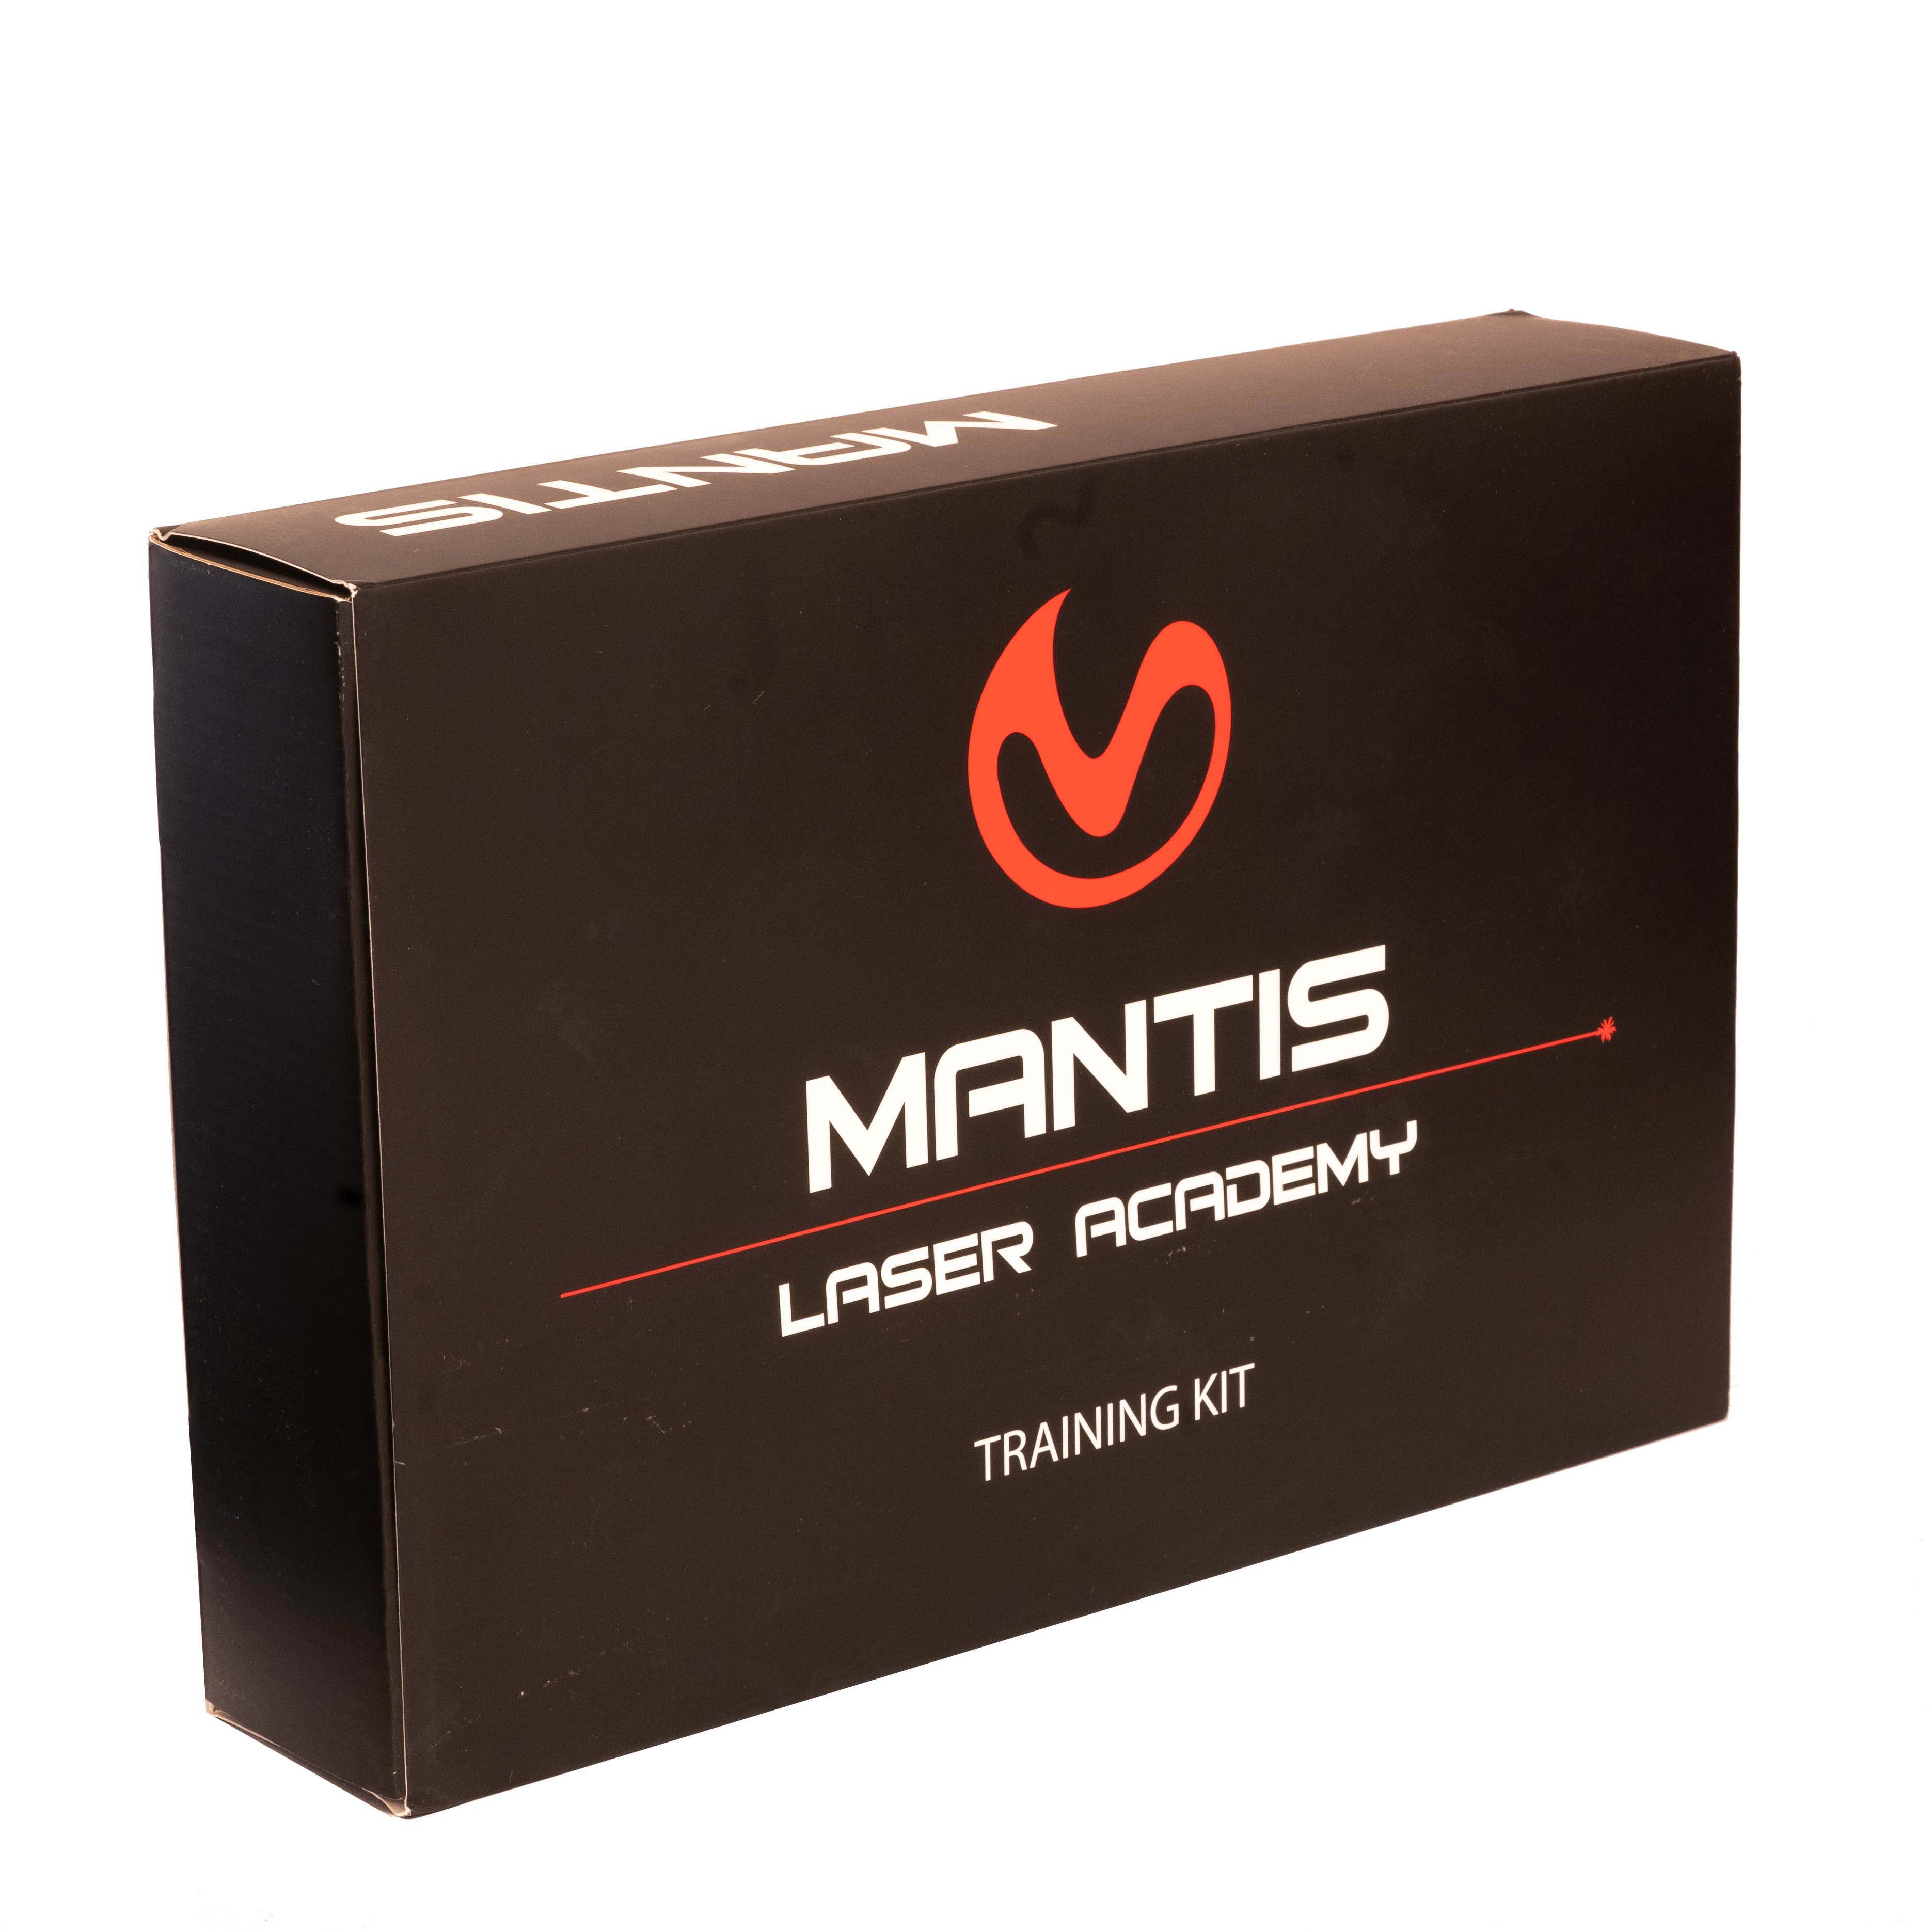 Mantis Training Kit Laser Academy